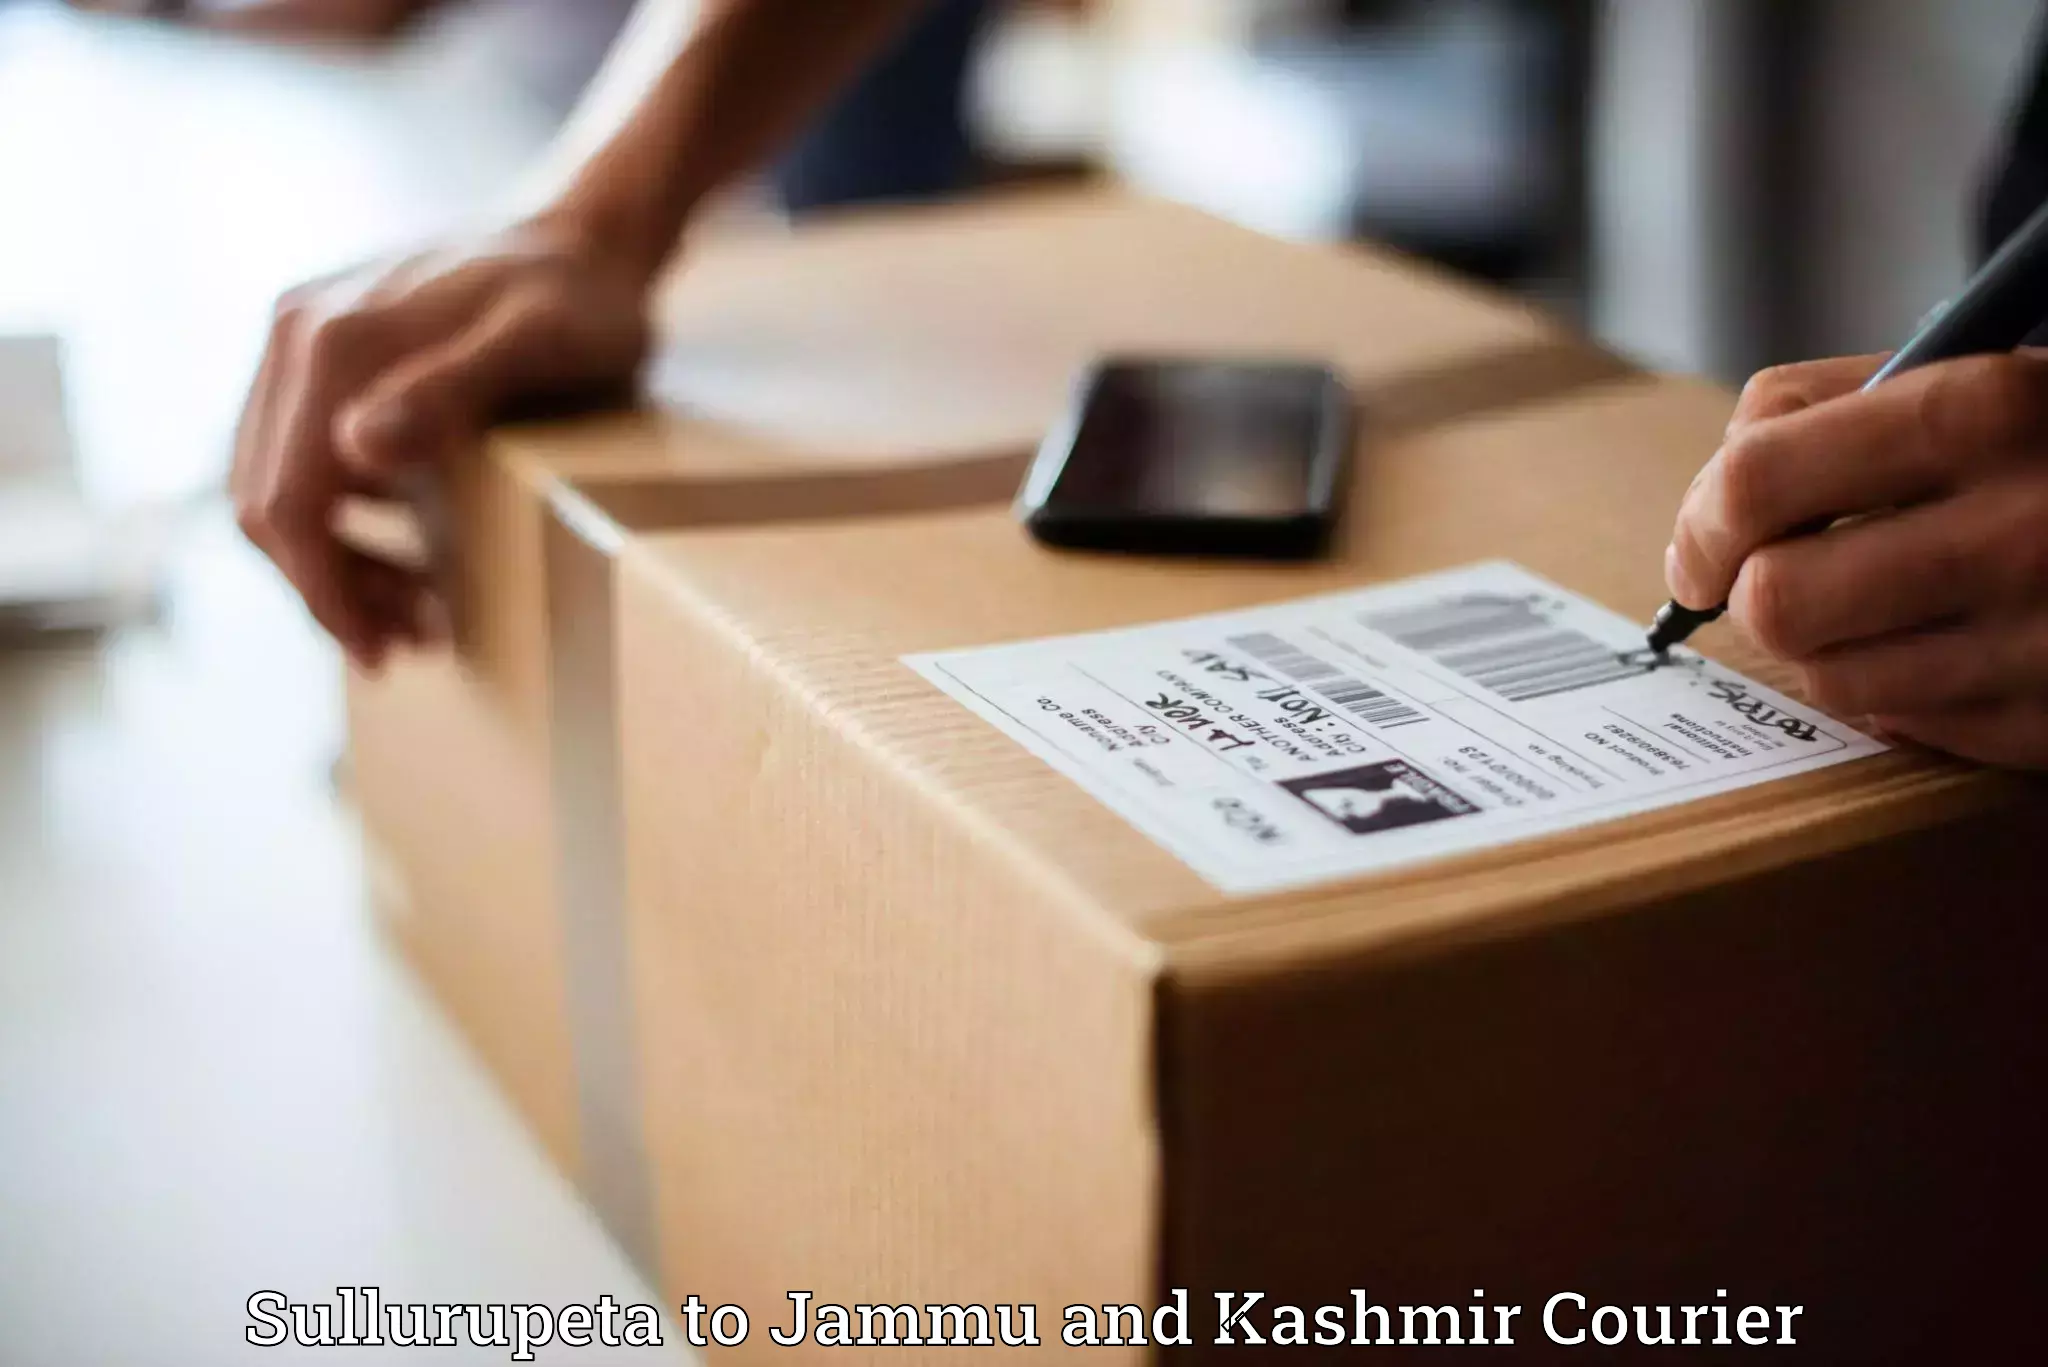 User-friendly delivery service Sullurupeta to University of Jammu